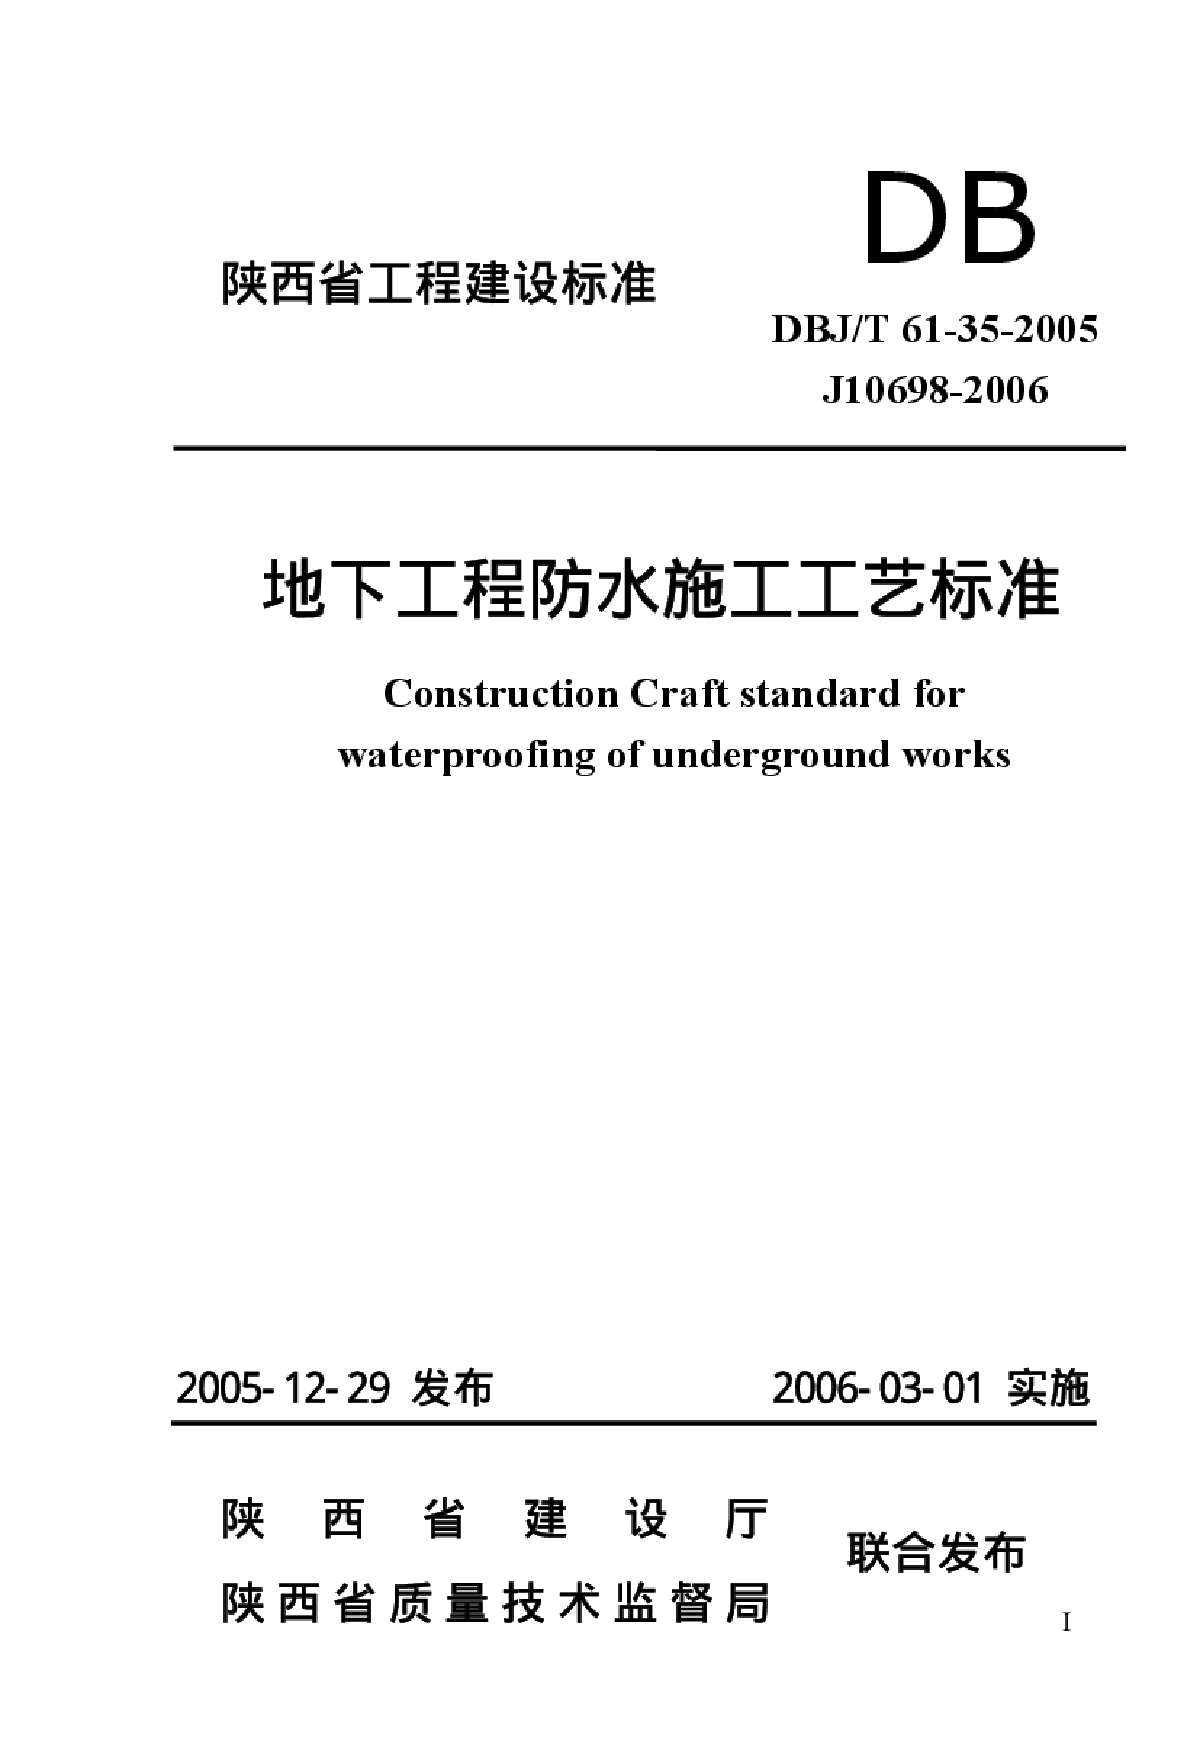 DBJT 61-35-2005 地下工程防水施工工艺标准-图一